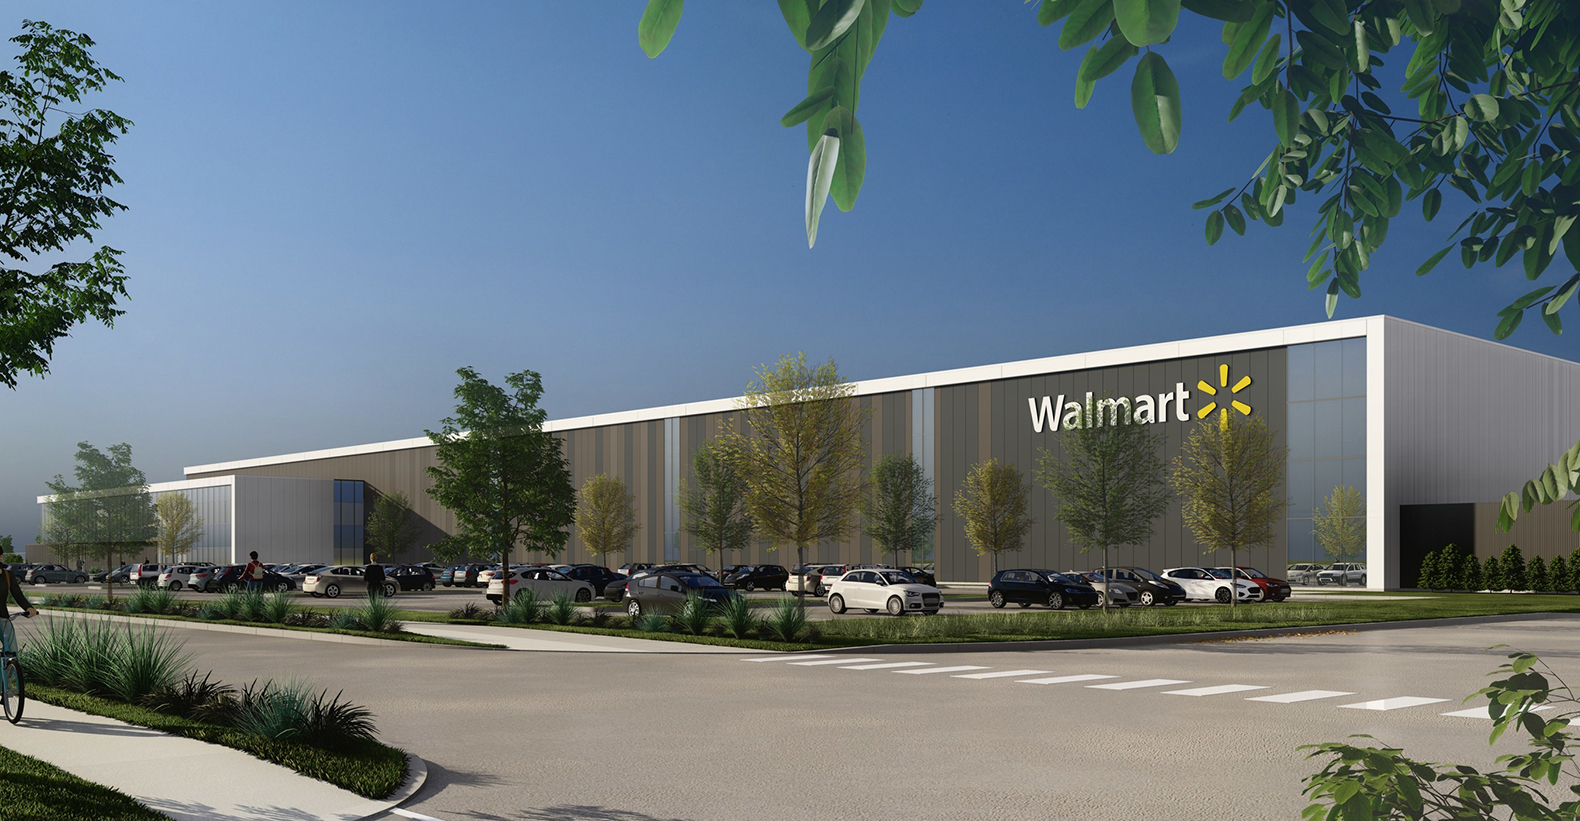 Walmart Canada investing $118 million to build new fulfillment